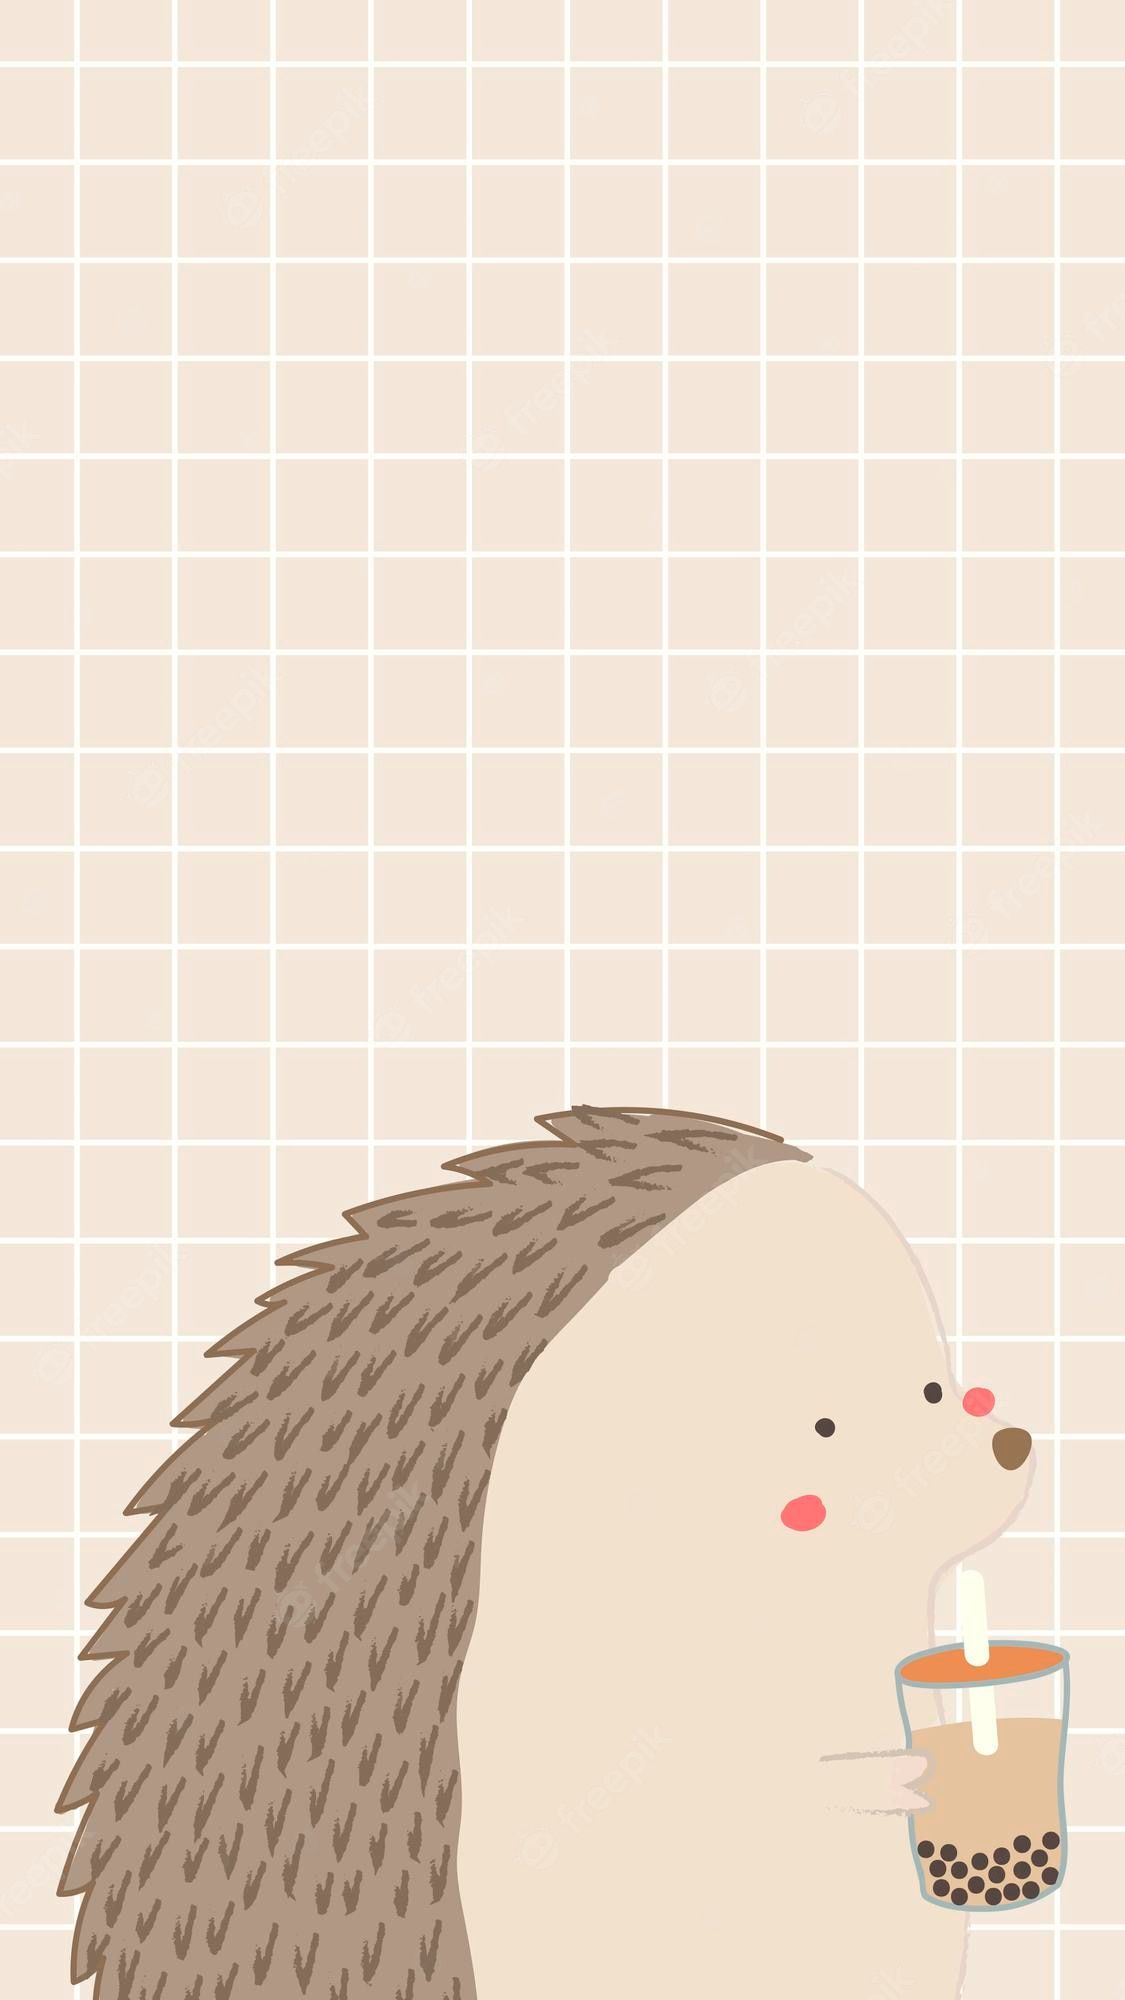 Free Vector. Cute porcupine drinking bubble tea mobile phone wallpaper